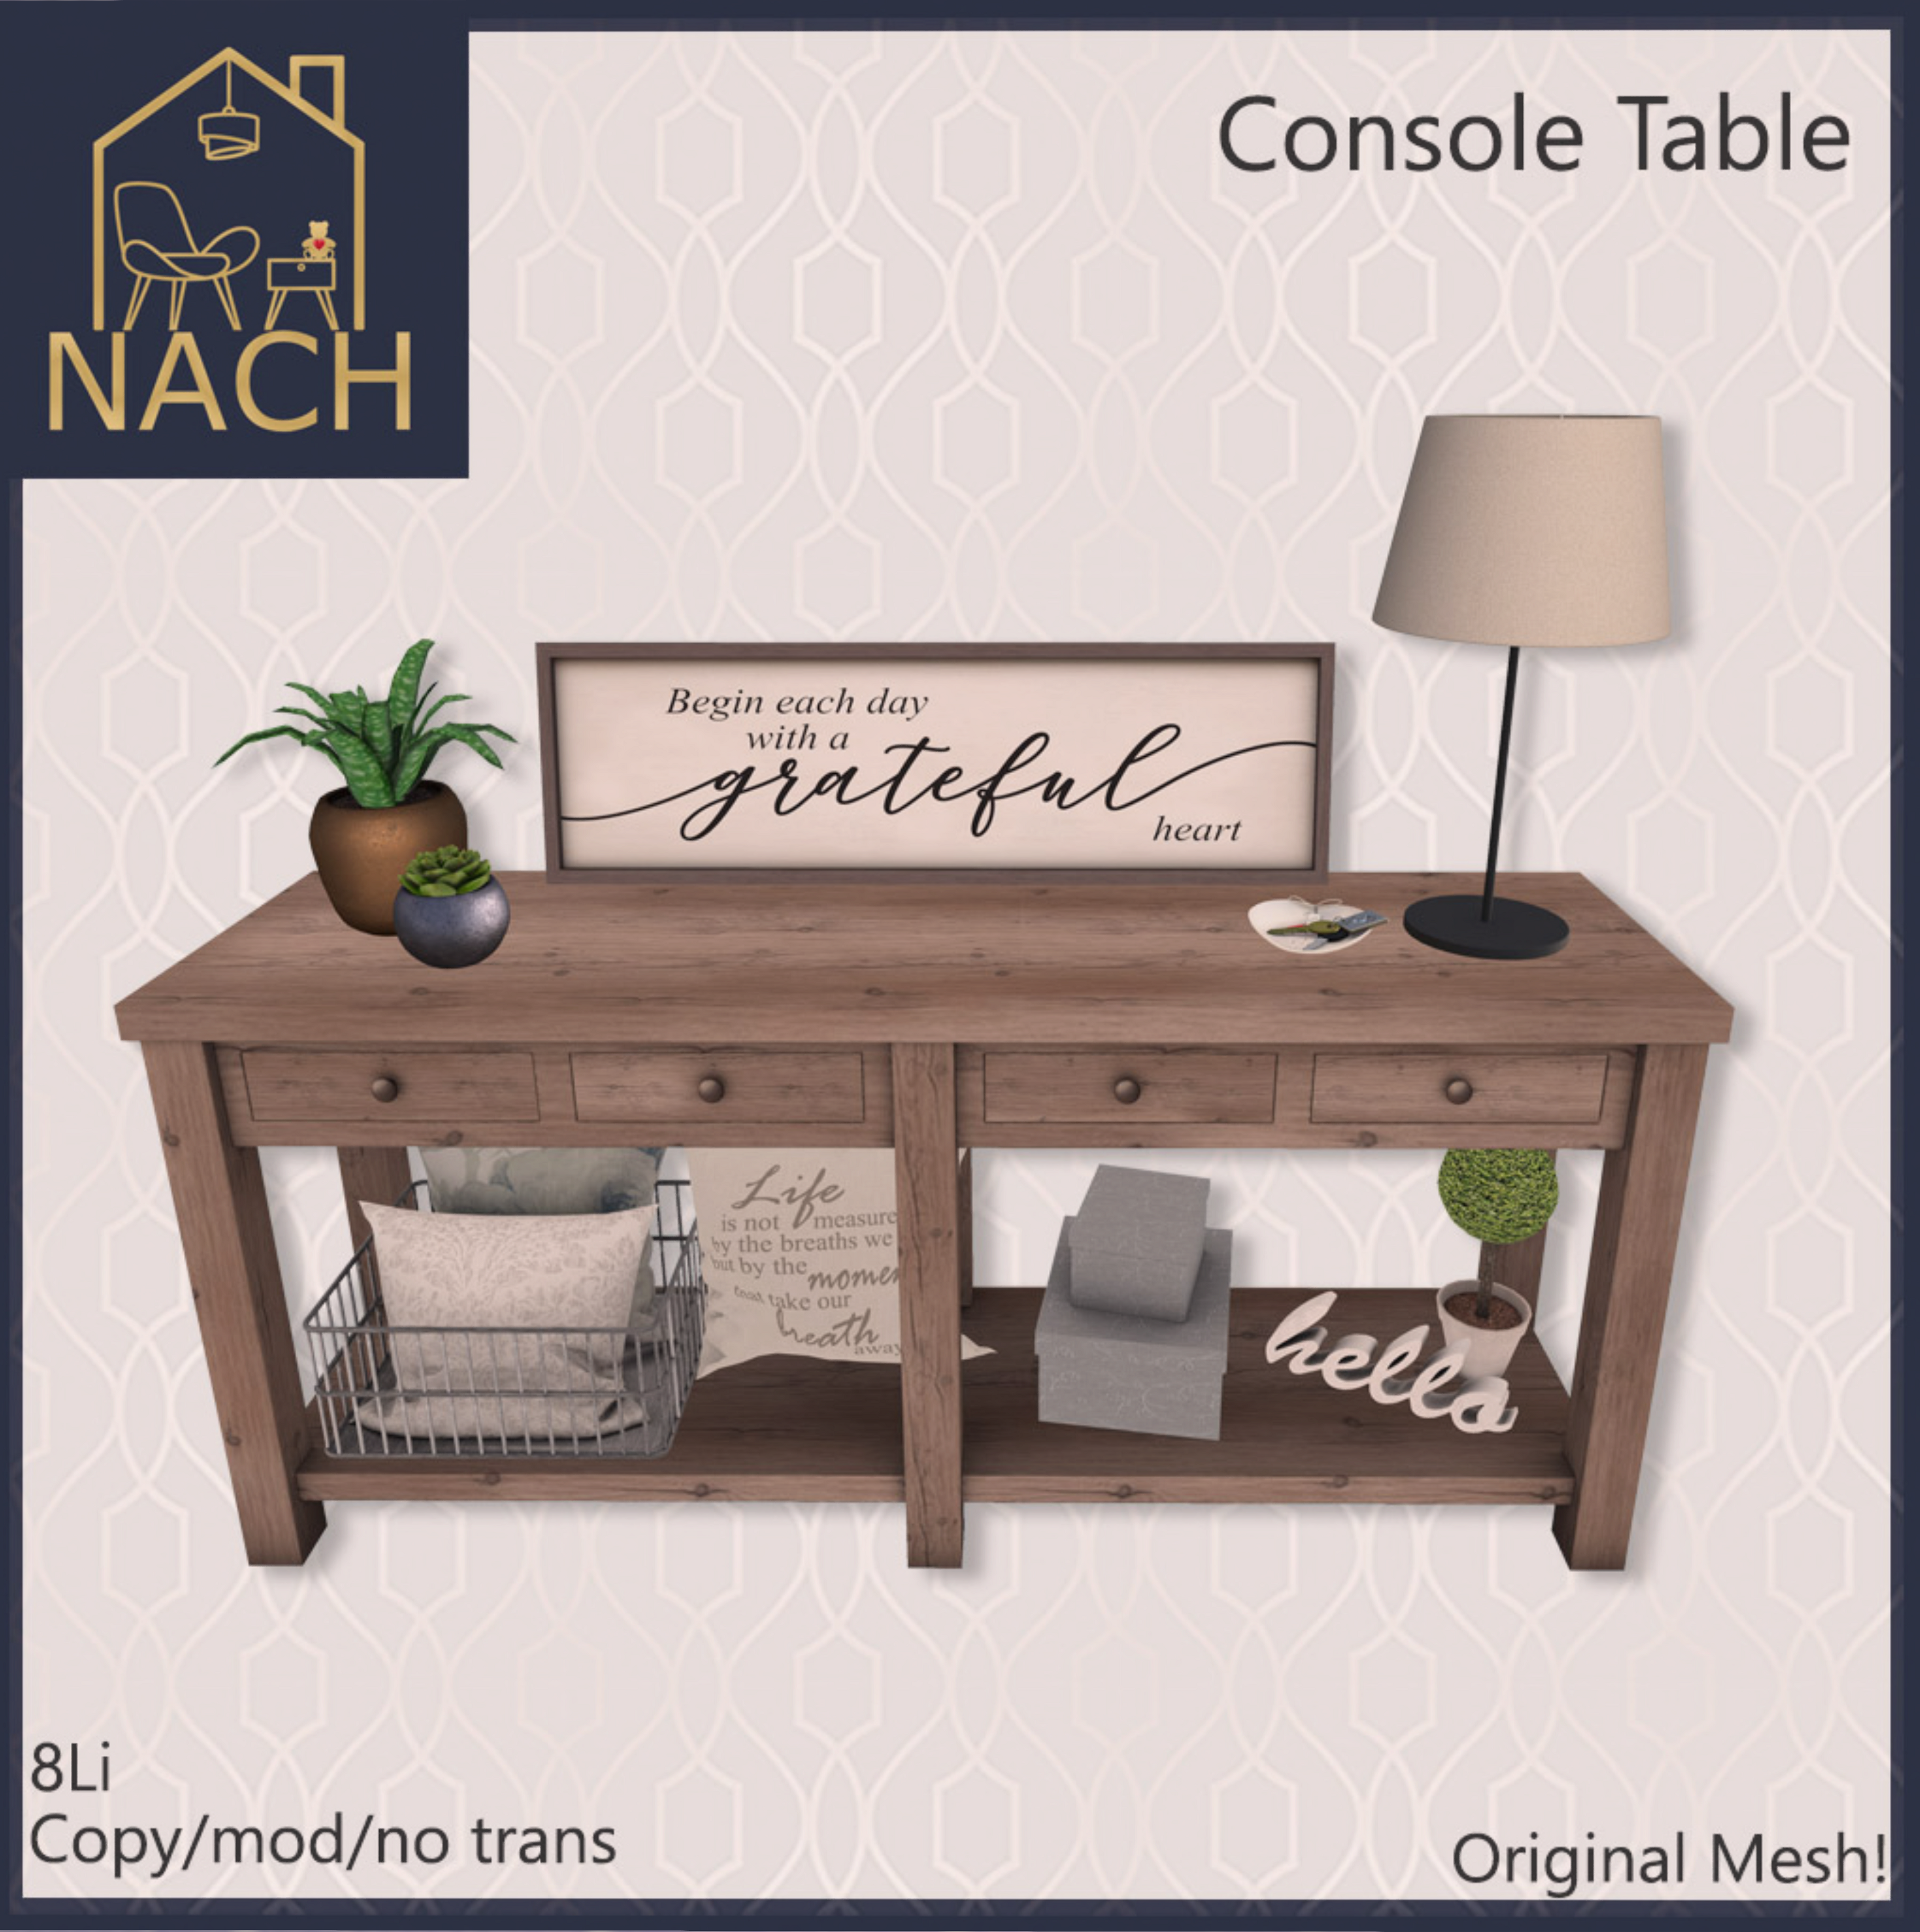 Nach – Console Table